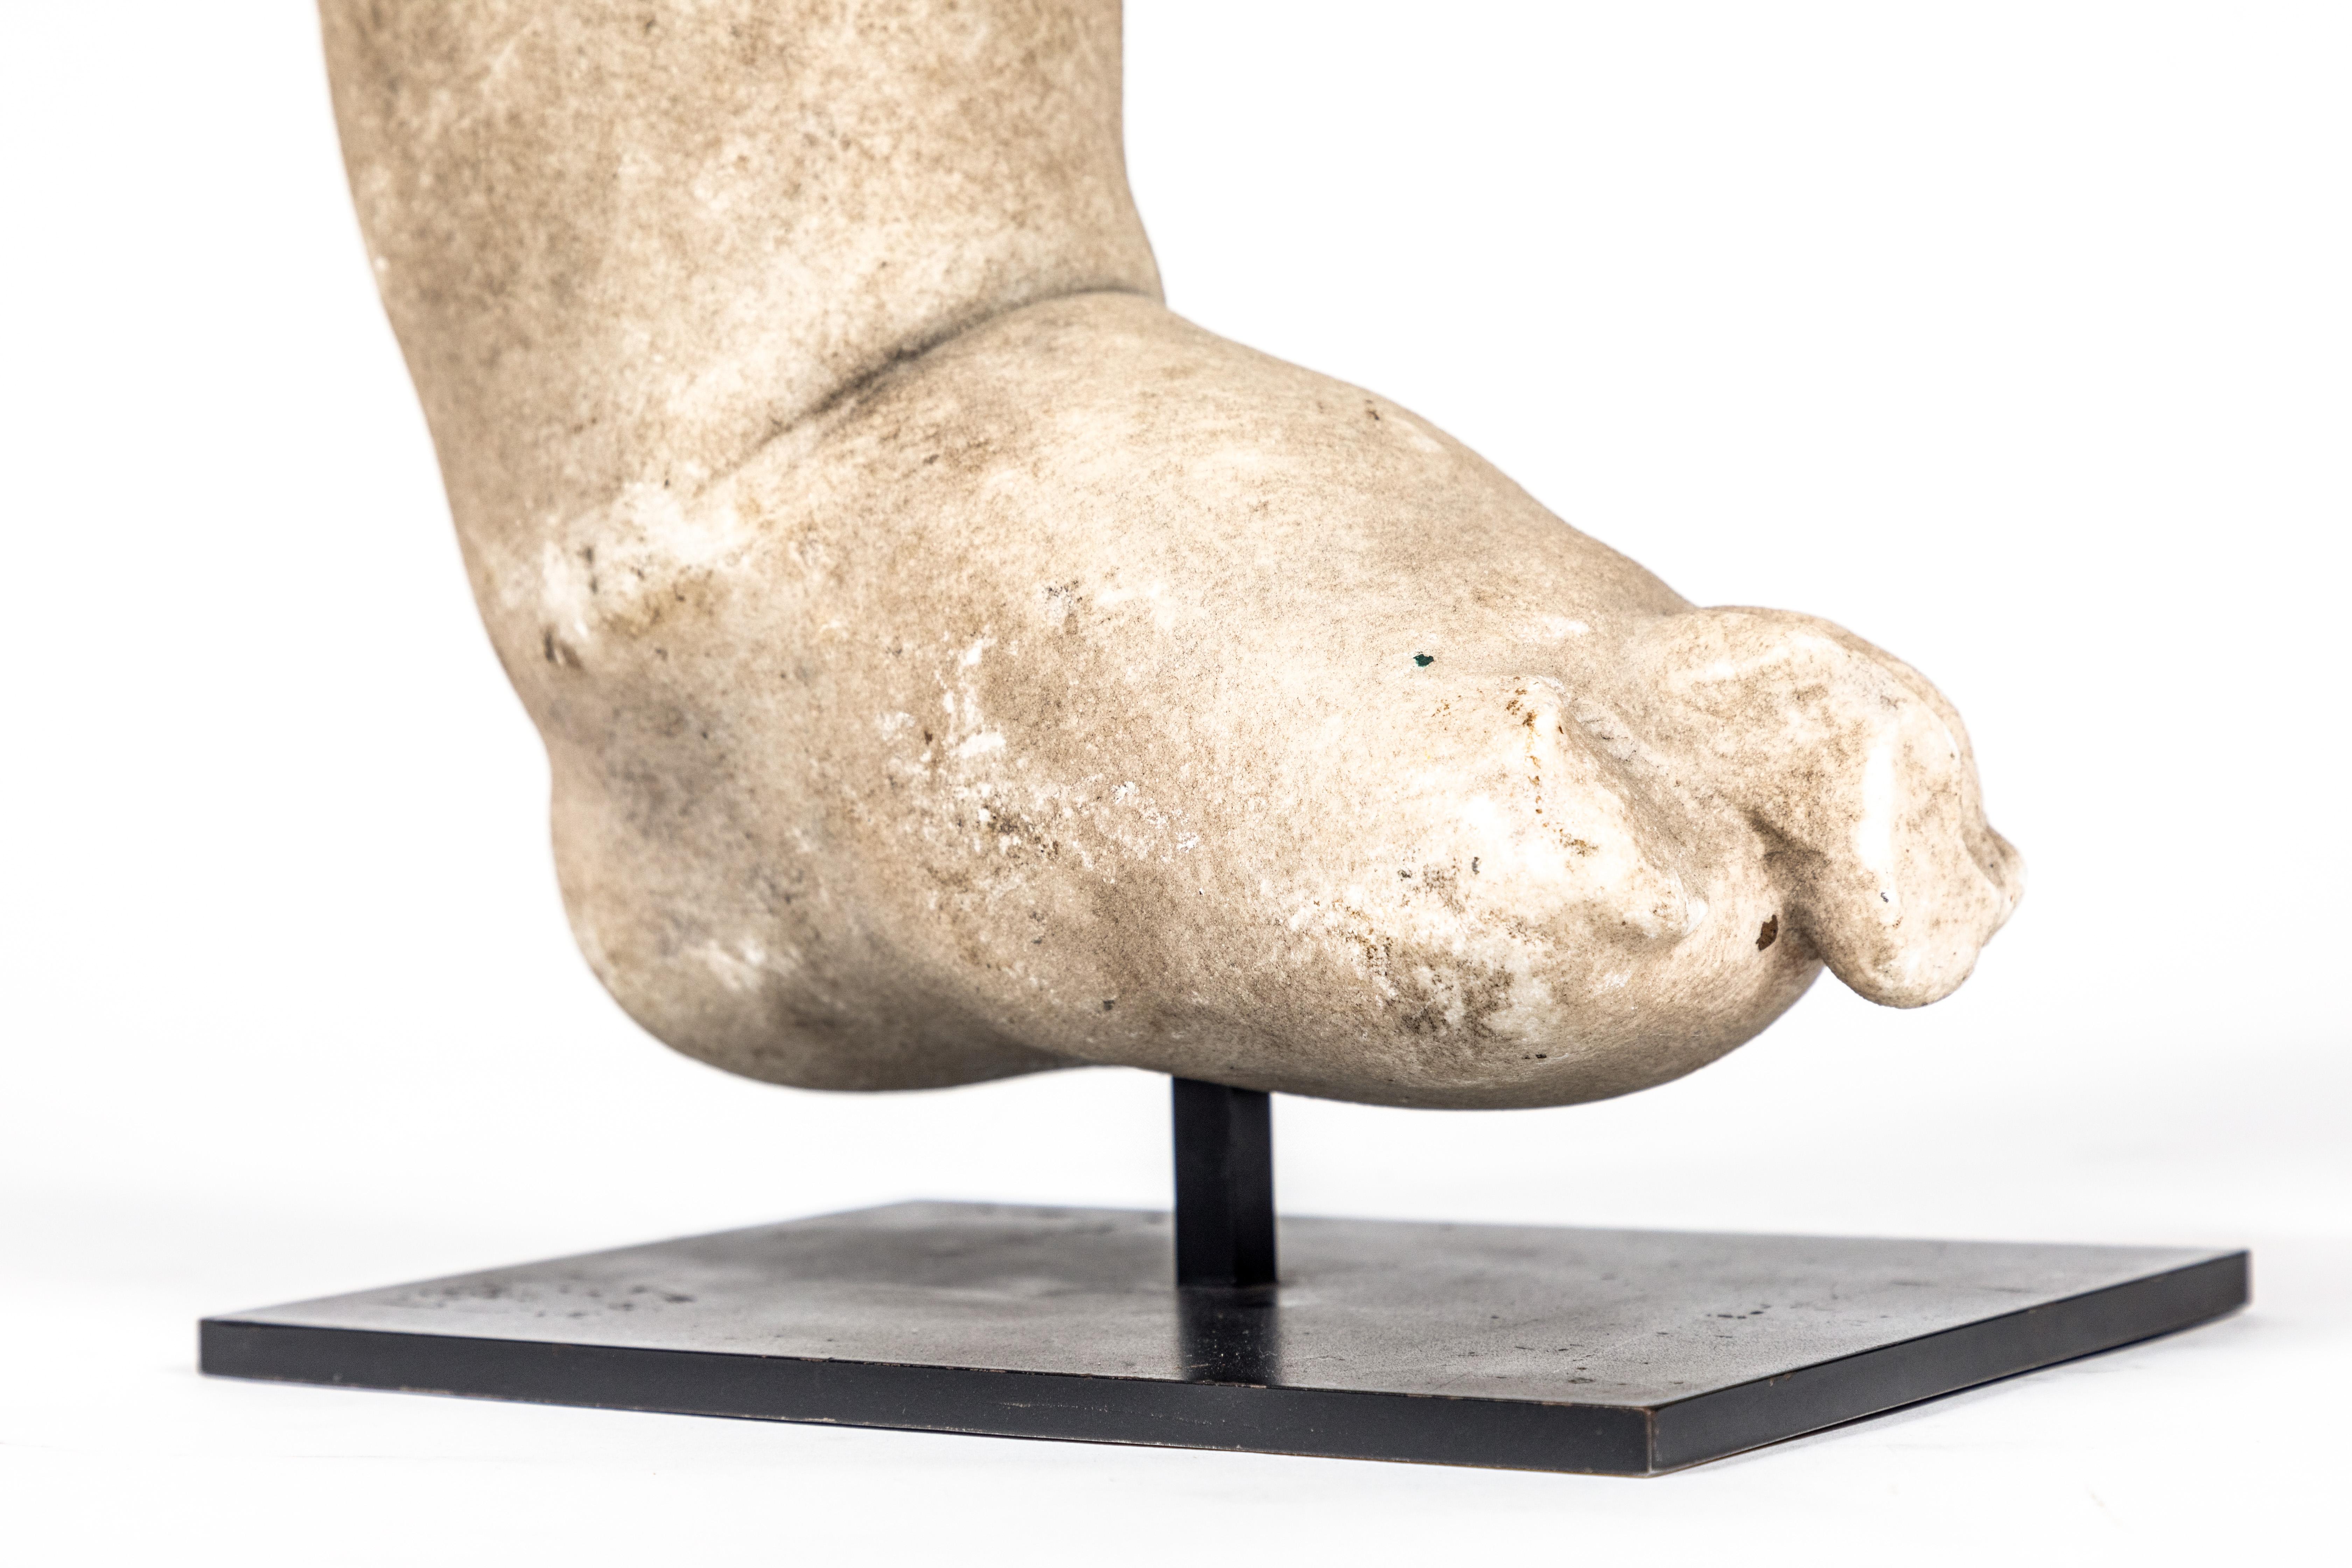 Carrara Marble Renaissance Era, Marble Fragment of a Leg For Sale